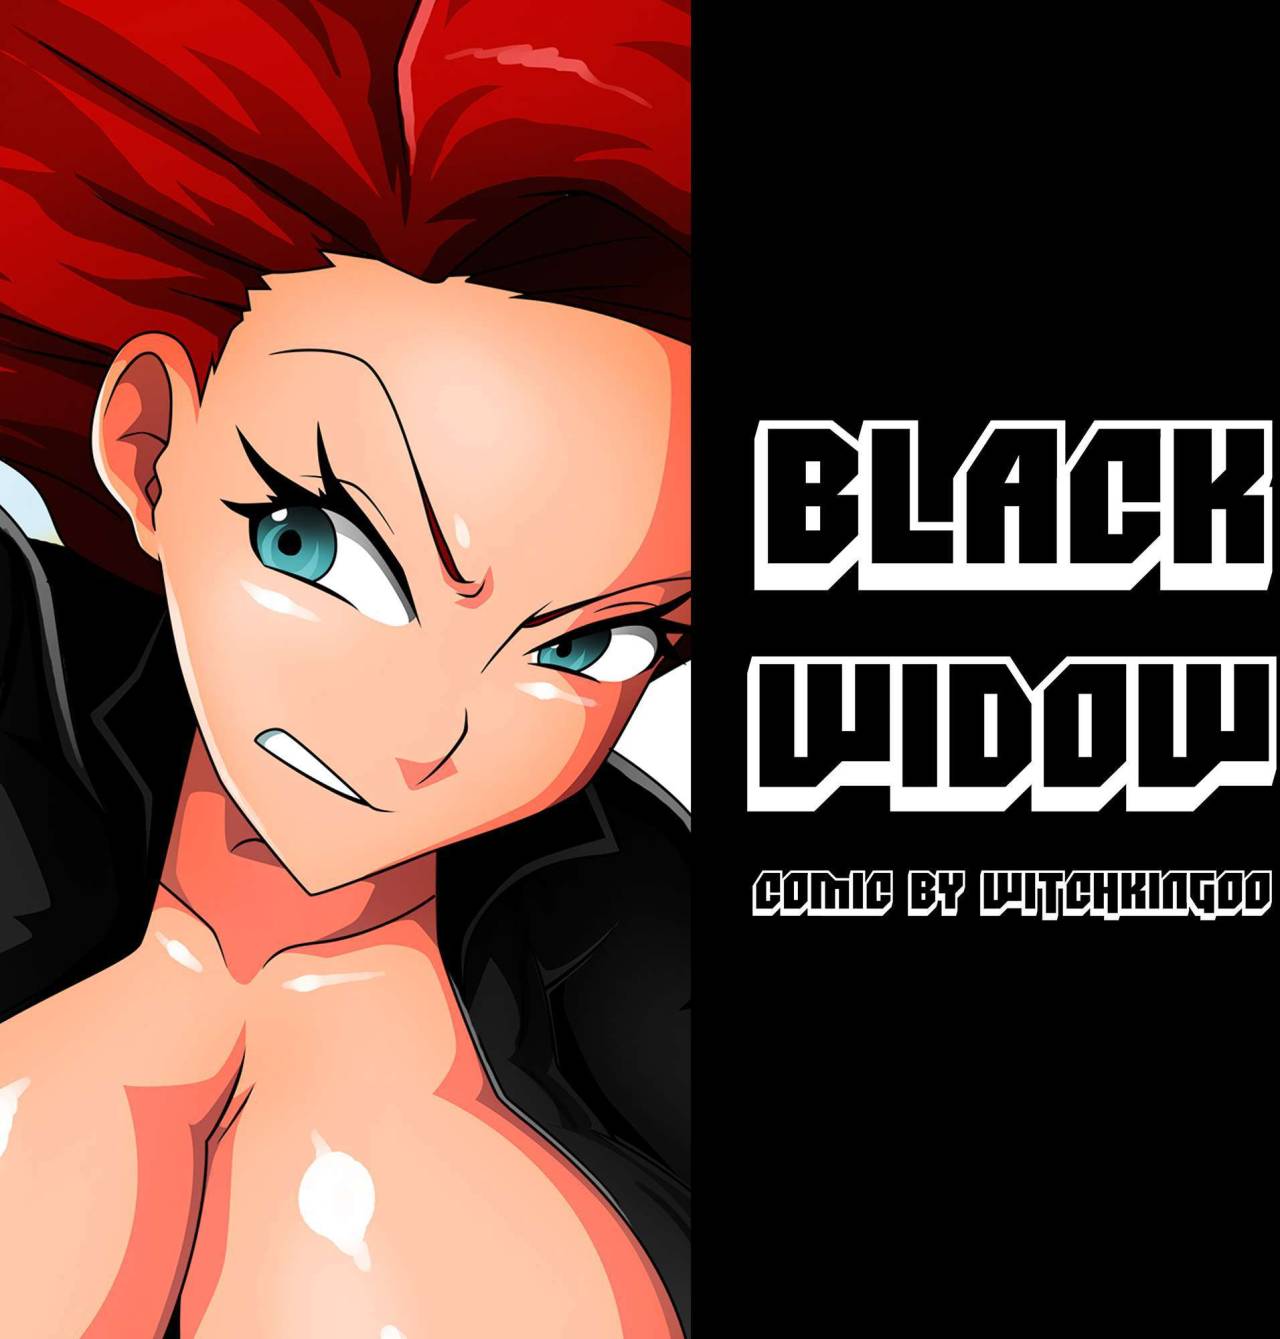 Black widow porn captions